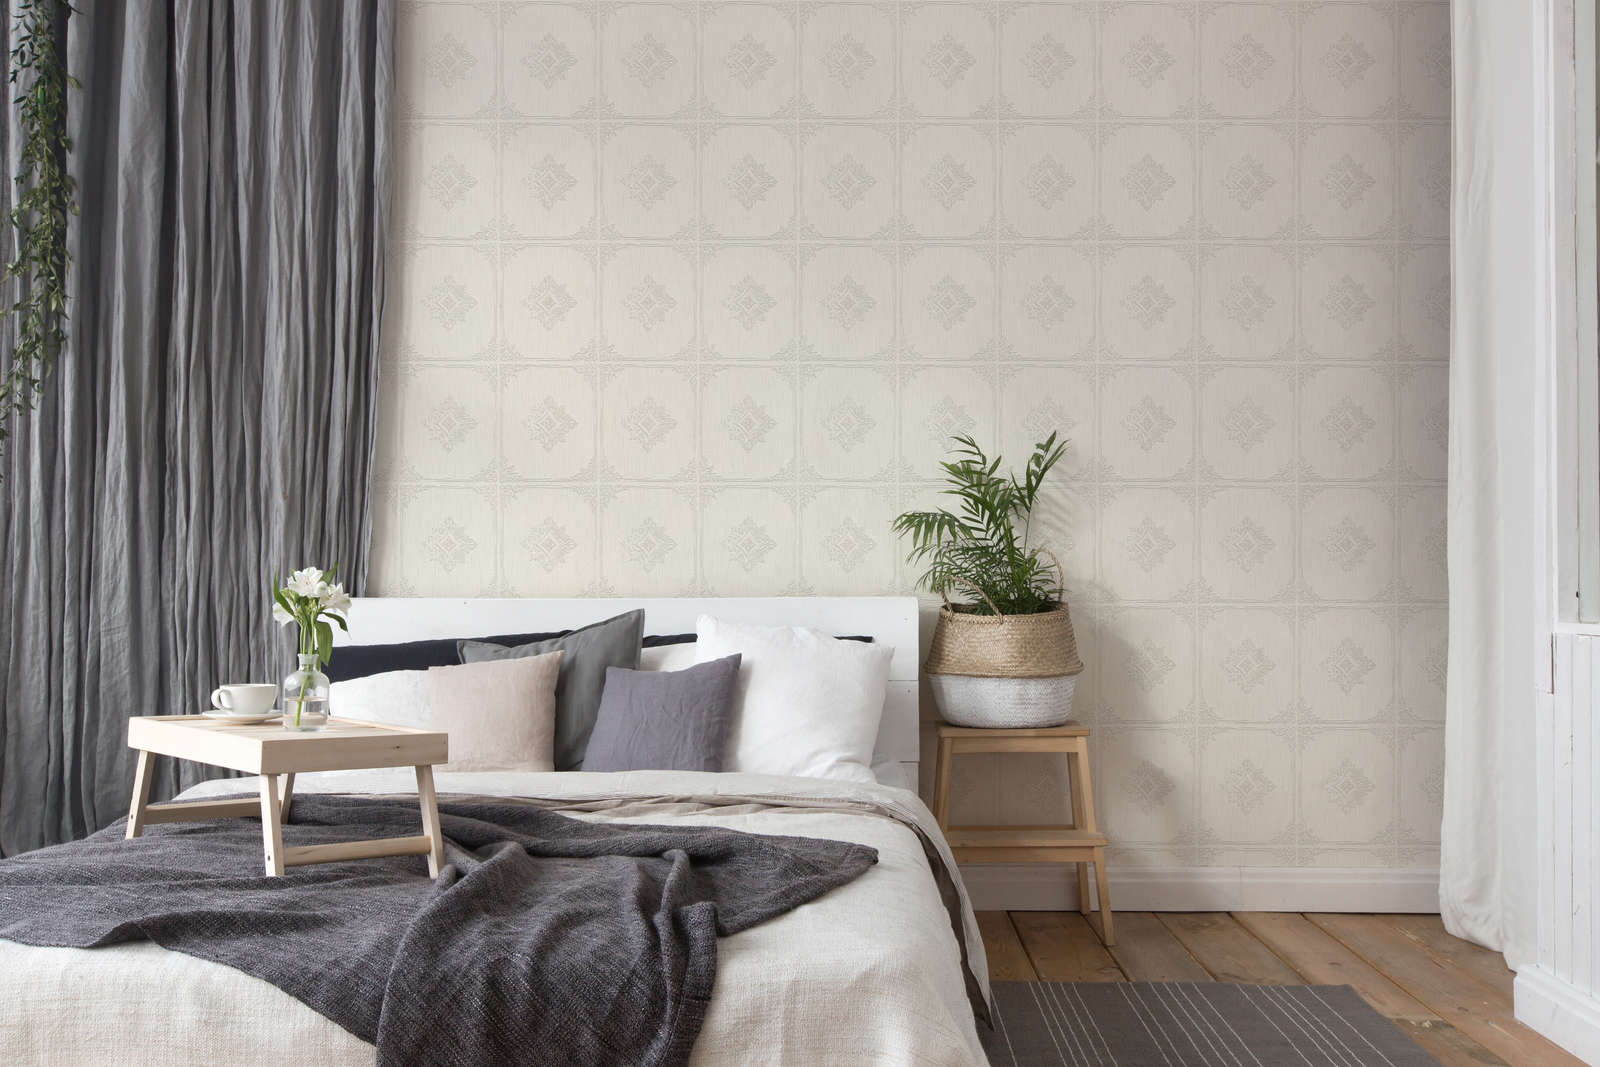             wallpaper vintage stucco design with ornament coffers - cream, grey
        